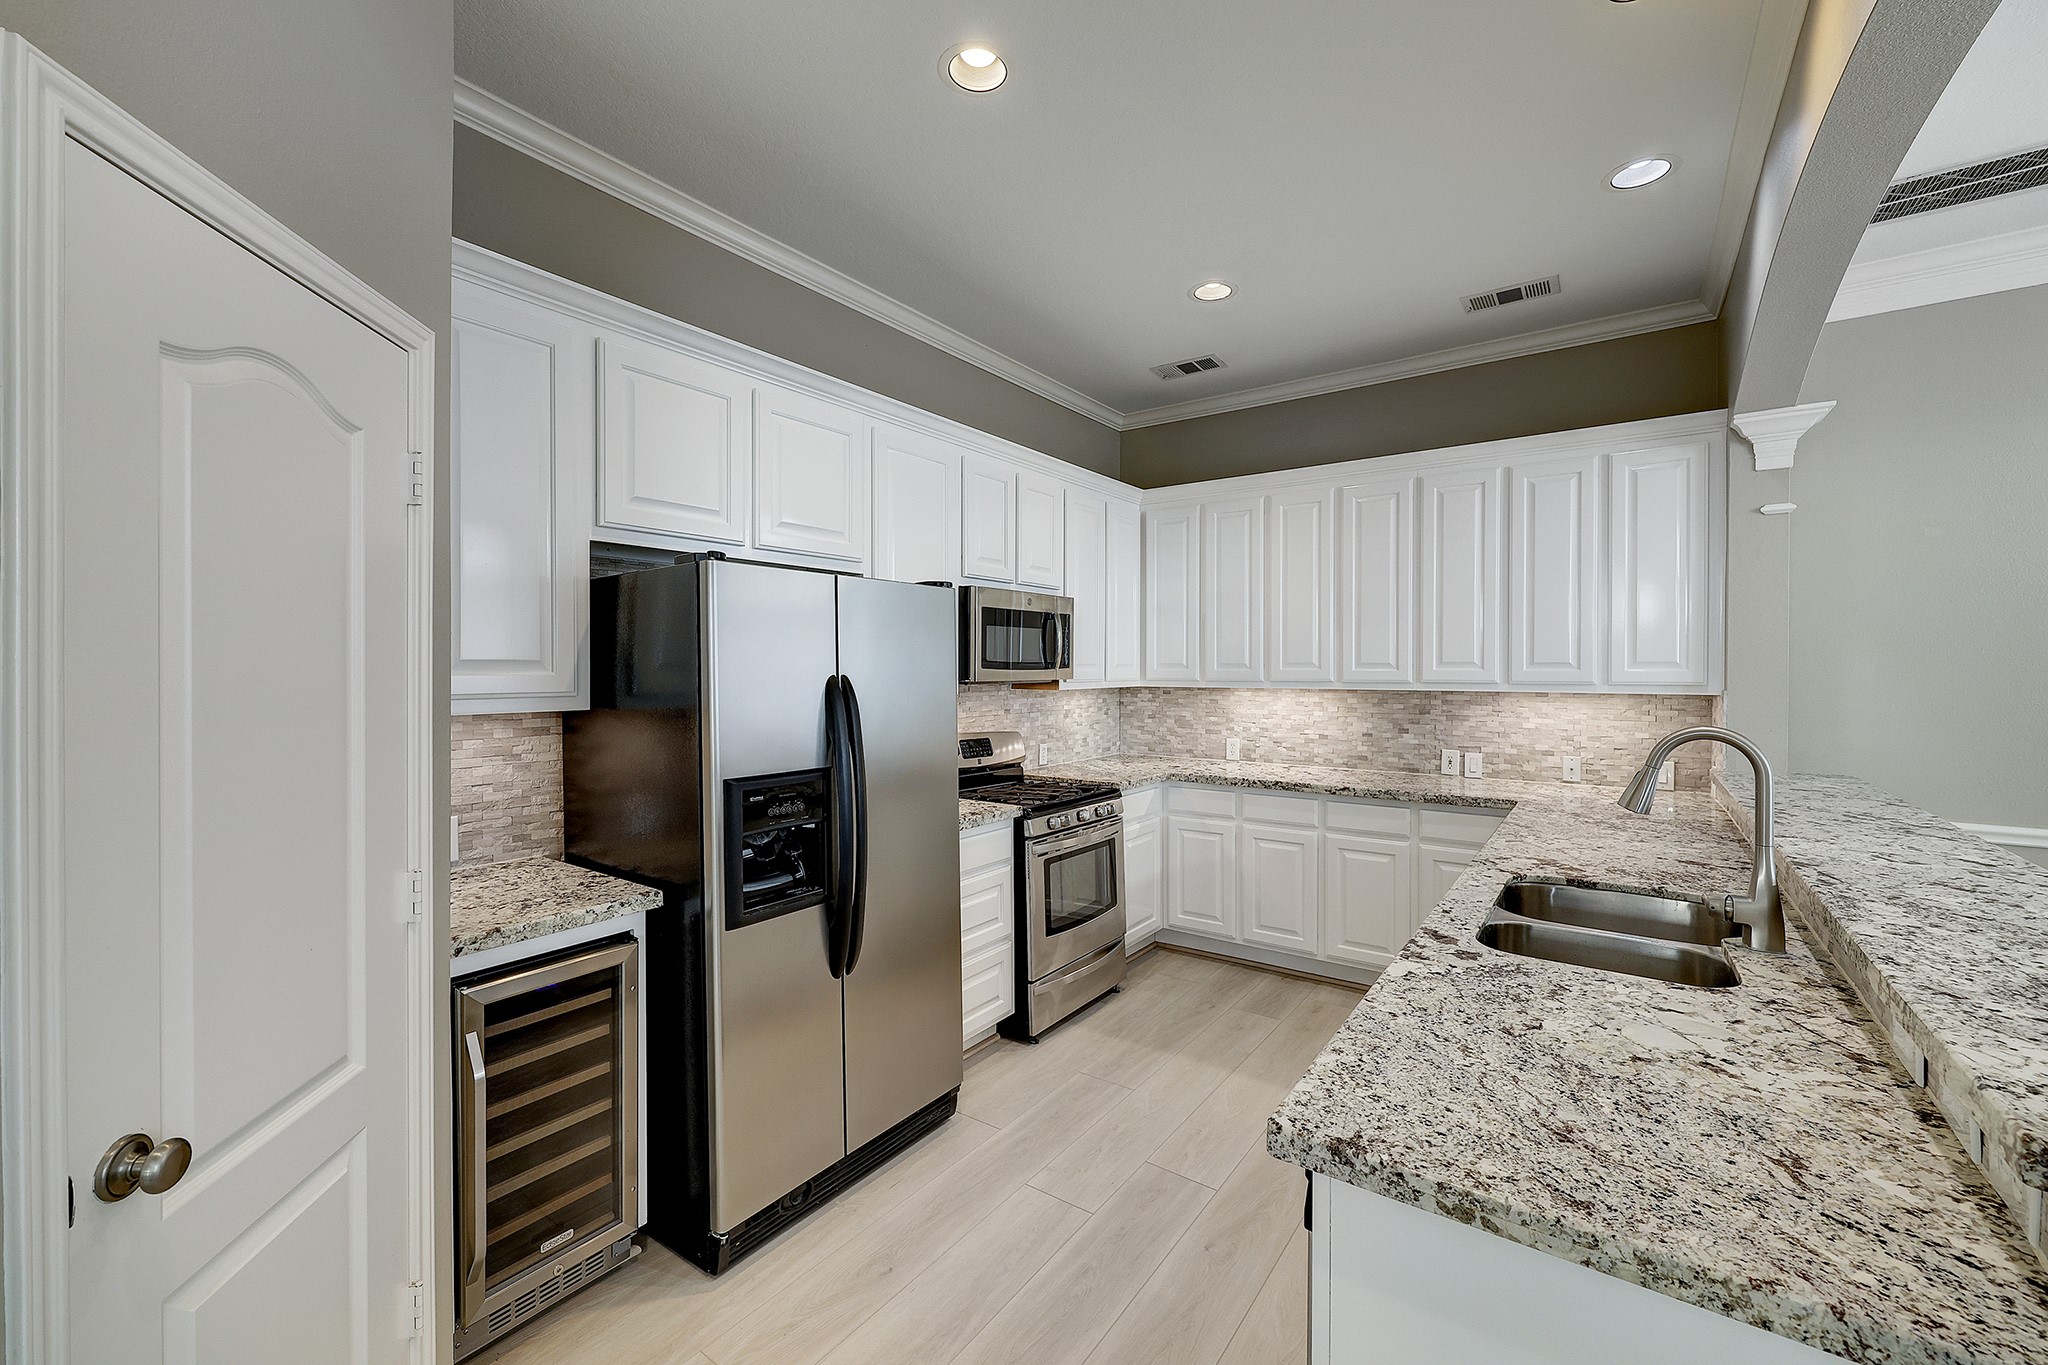 Elegant granite countertops, abundant storage and wine fridge adorn the open kitchen. Refrigerator included